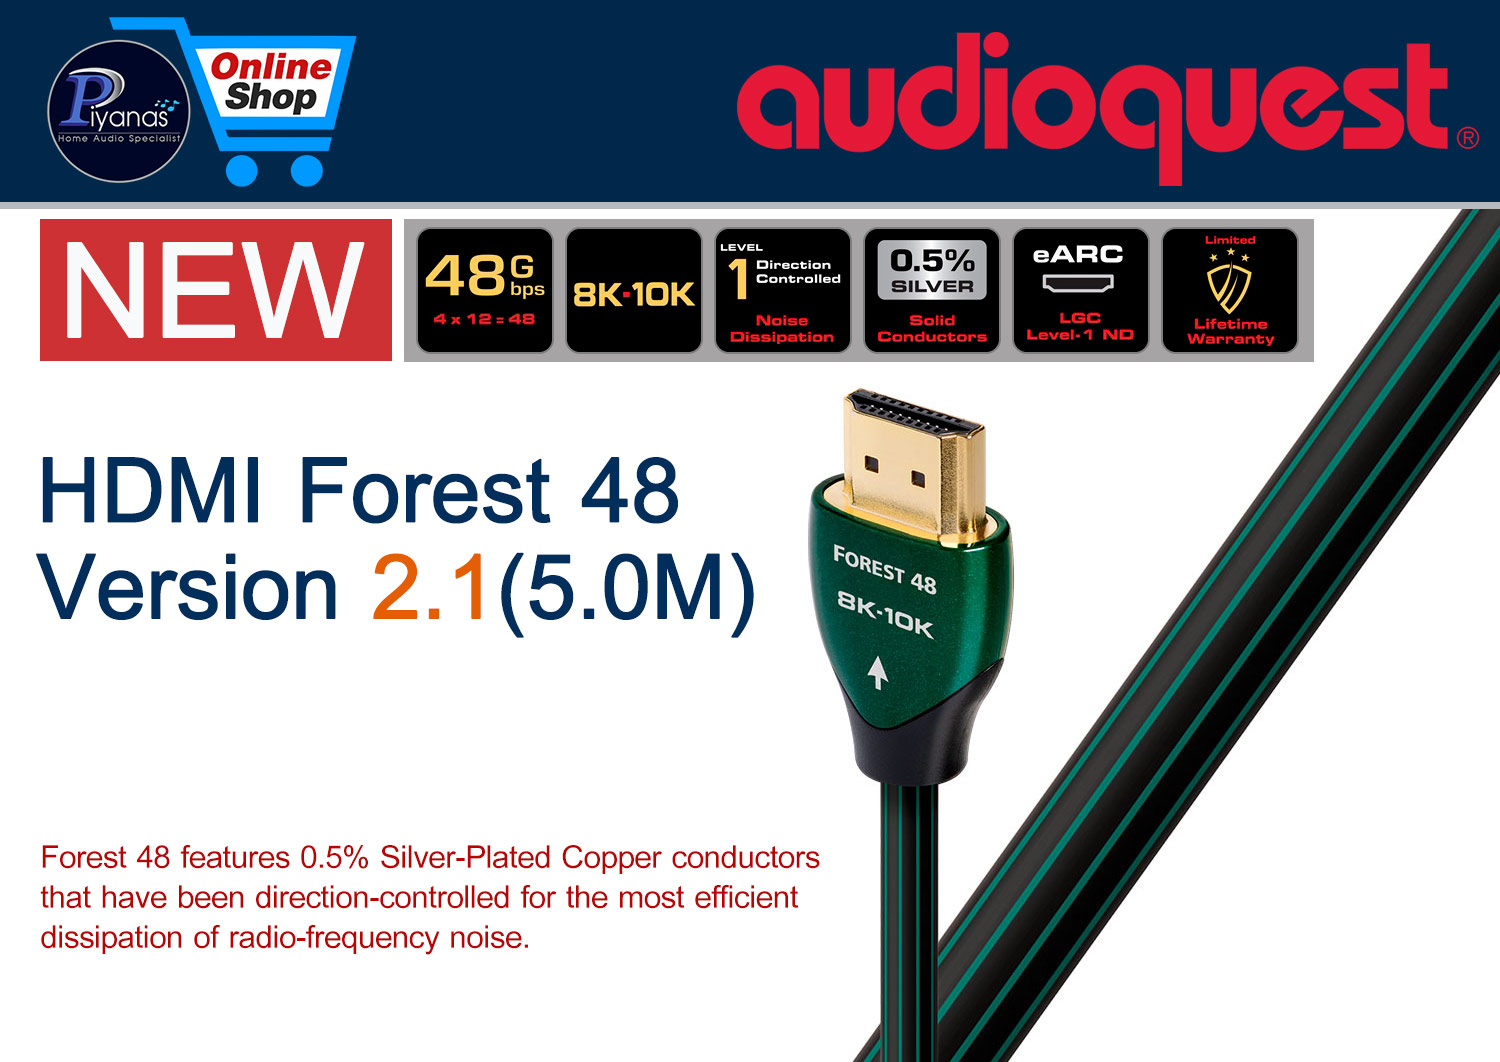 HDMI-Forest 48 Version 2.1 (5.0M)